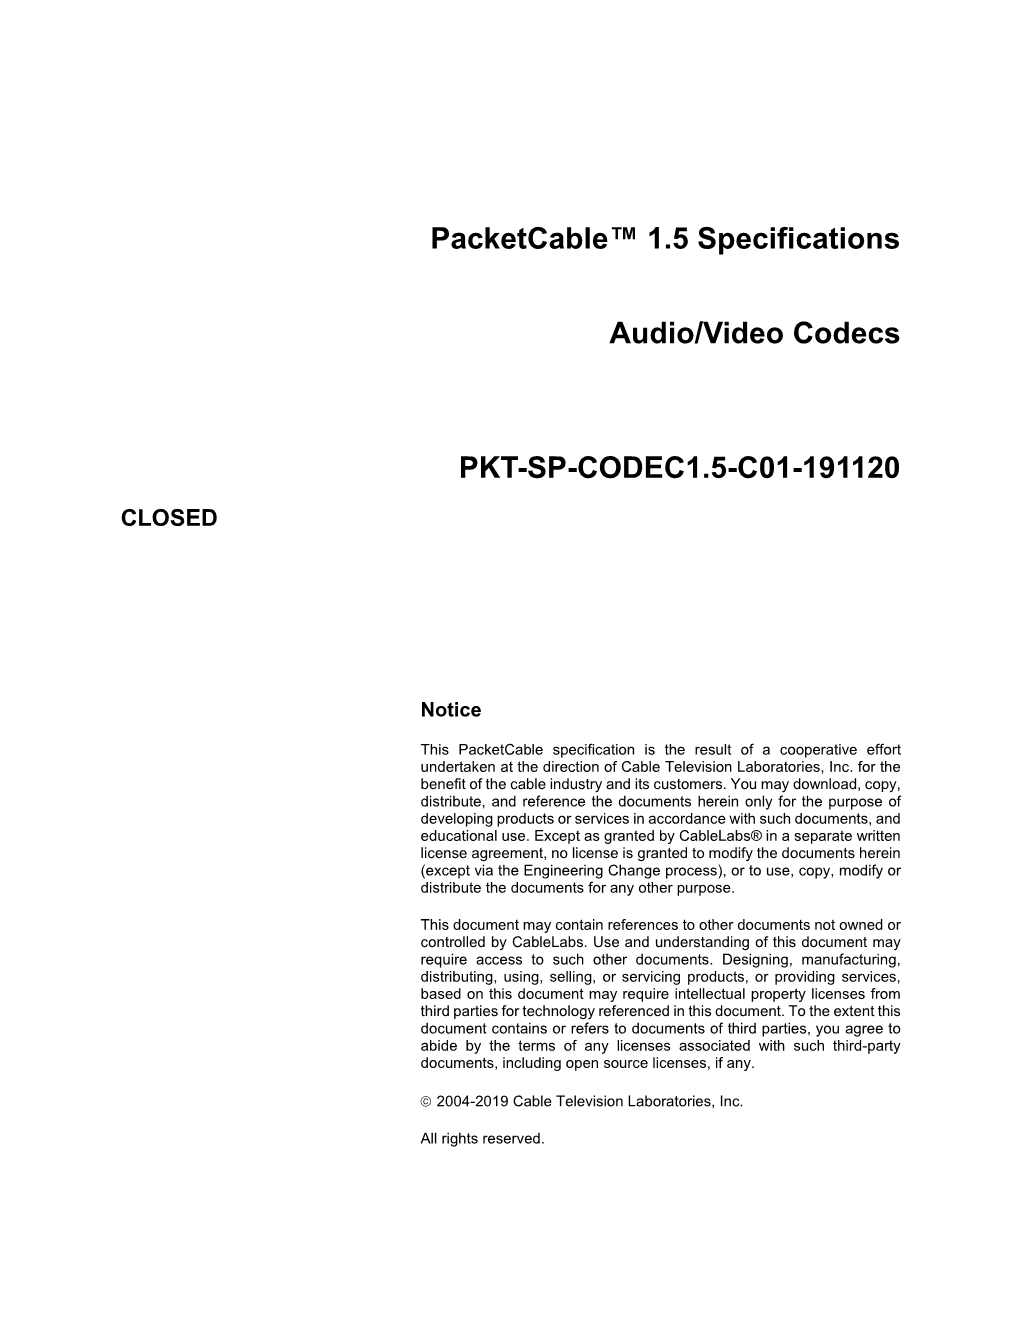 Packetcable™ 1.5 Specifications Audio/Video Codecs PKT-SP-CODEC1.5-C01-191120